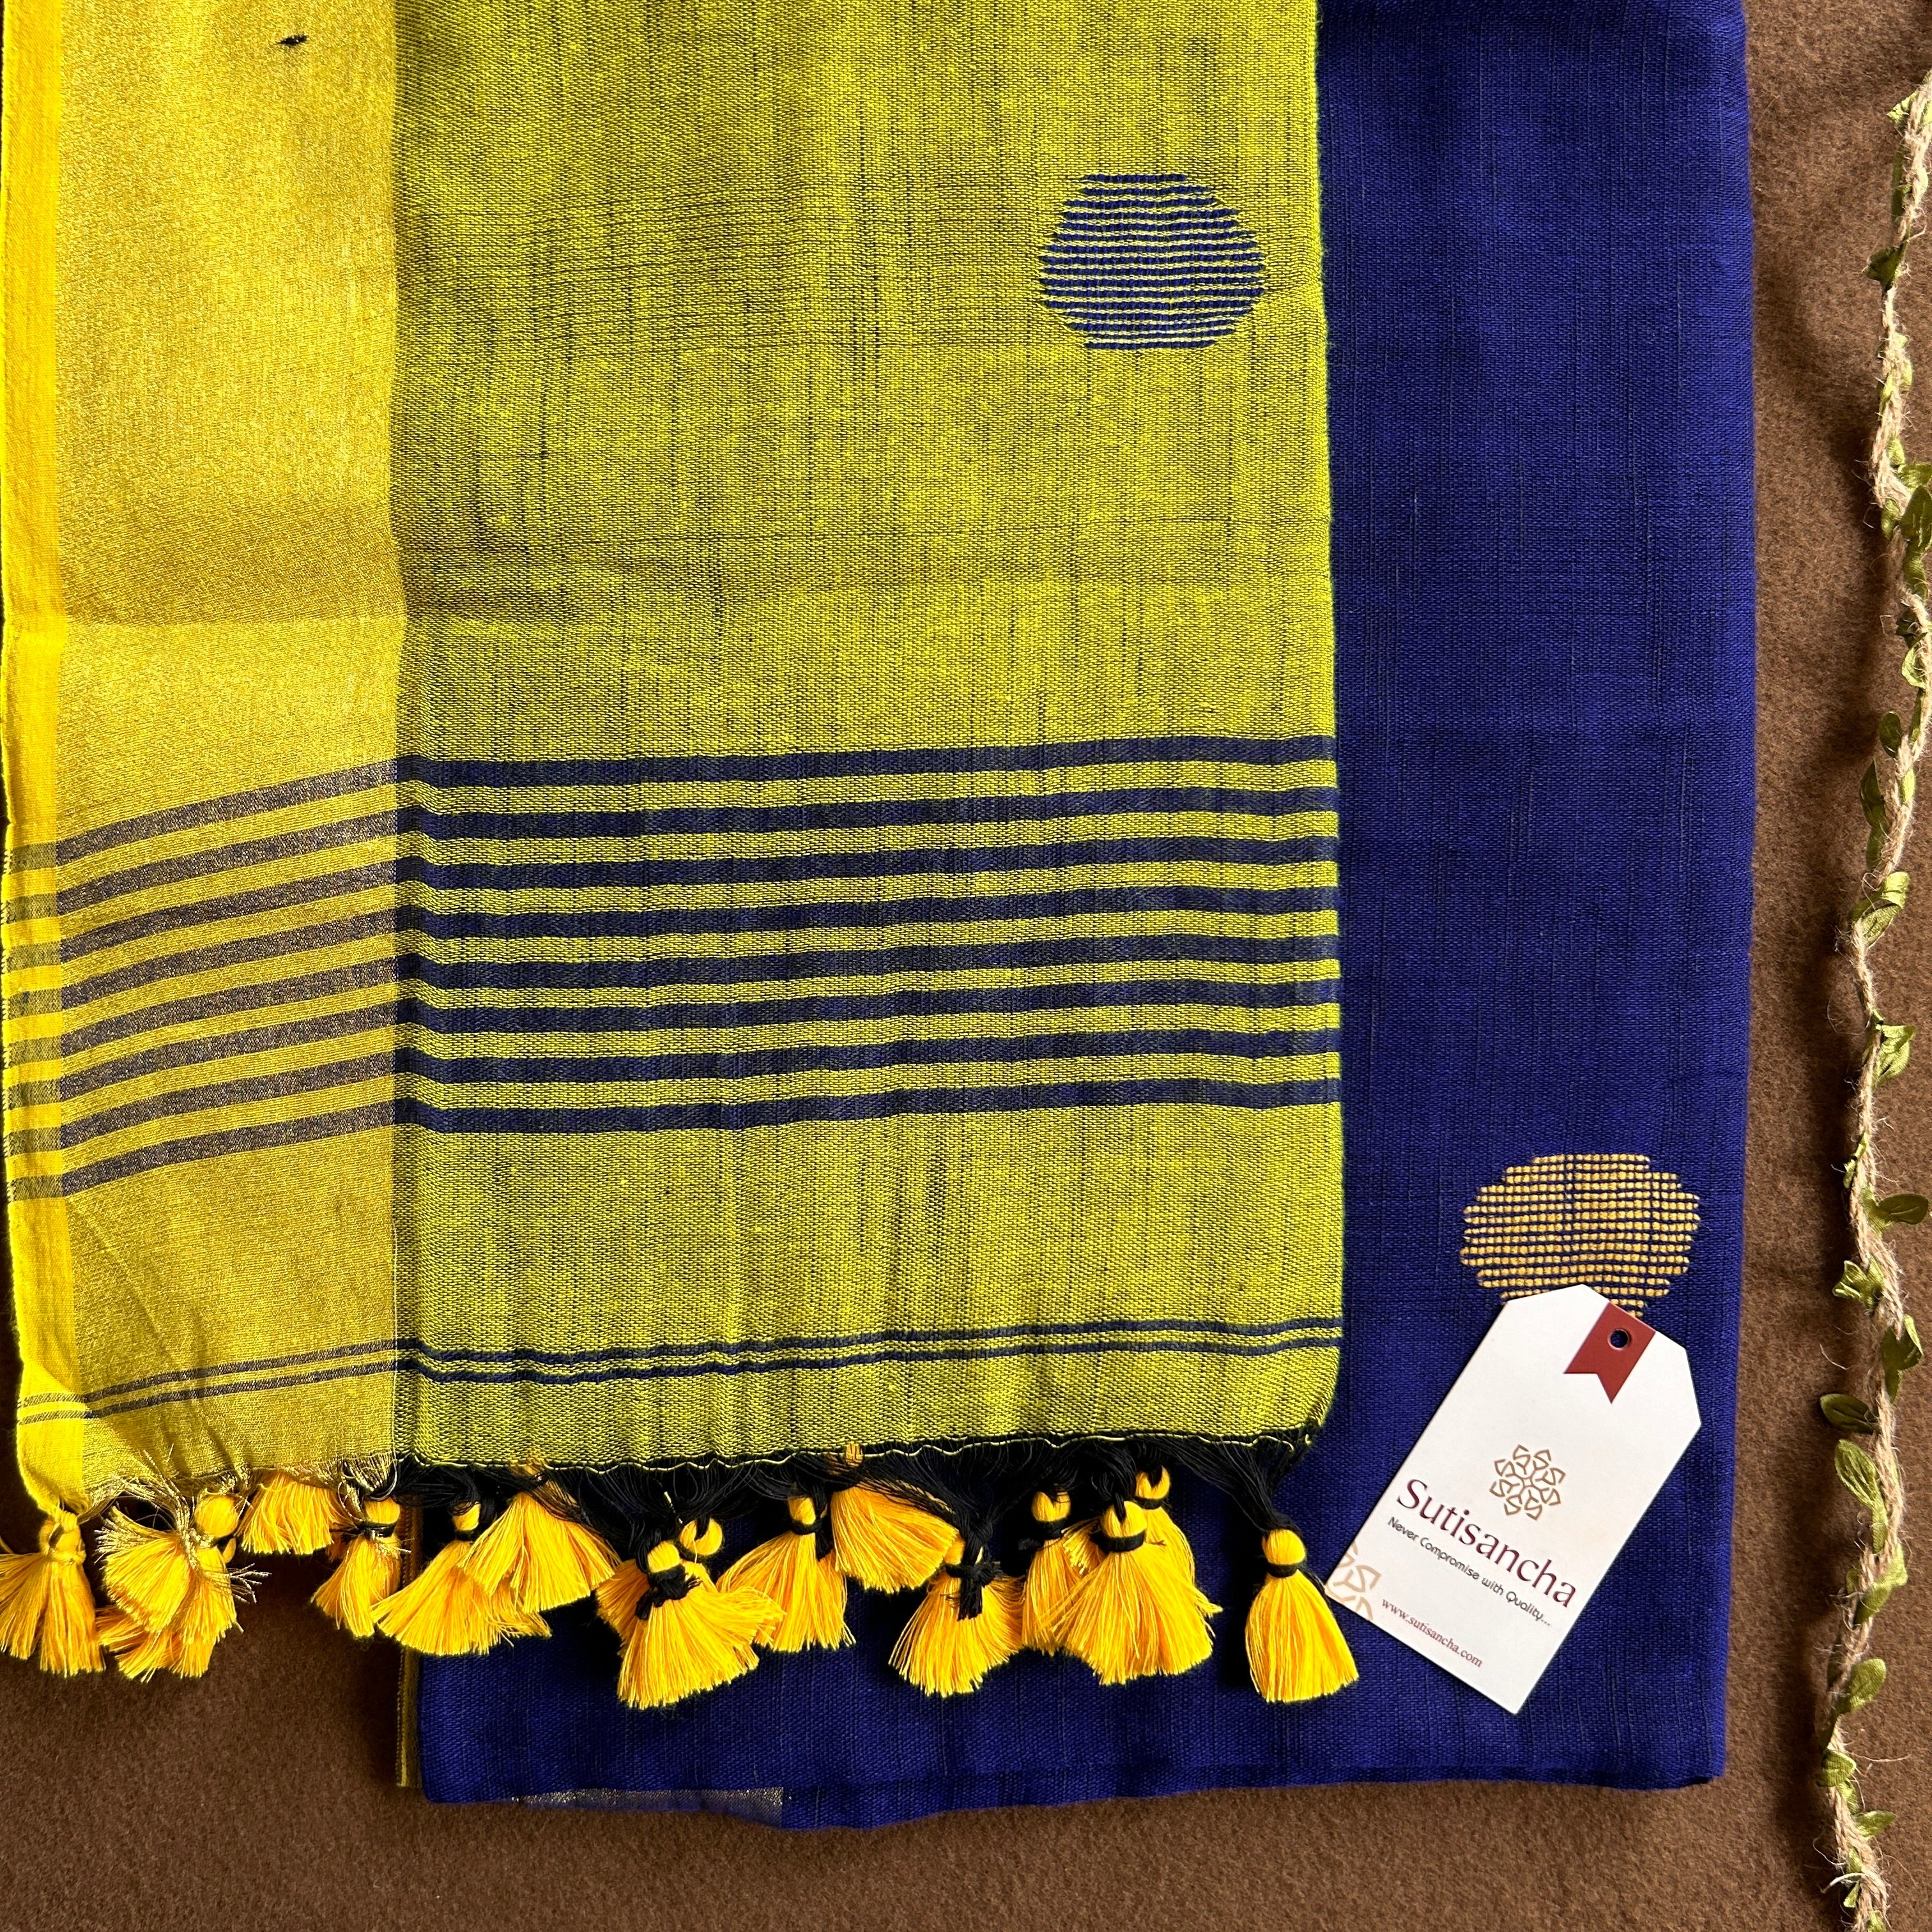 SutiSancha Woven Heritage Handloom Cotton Saree